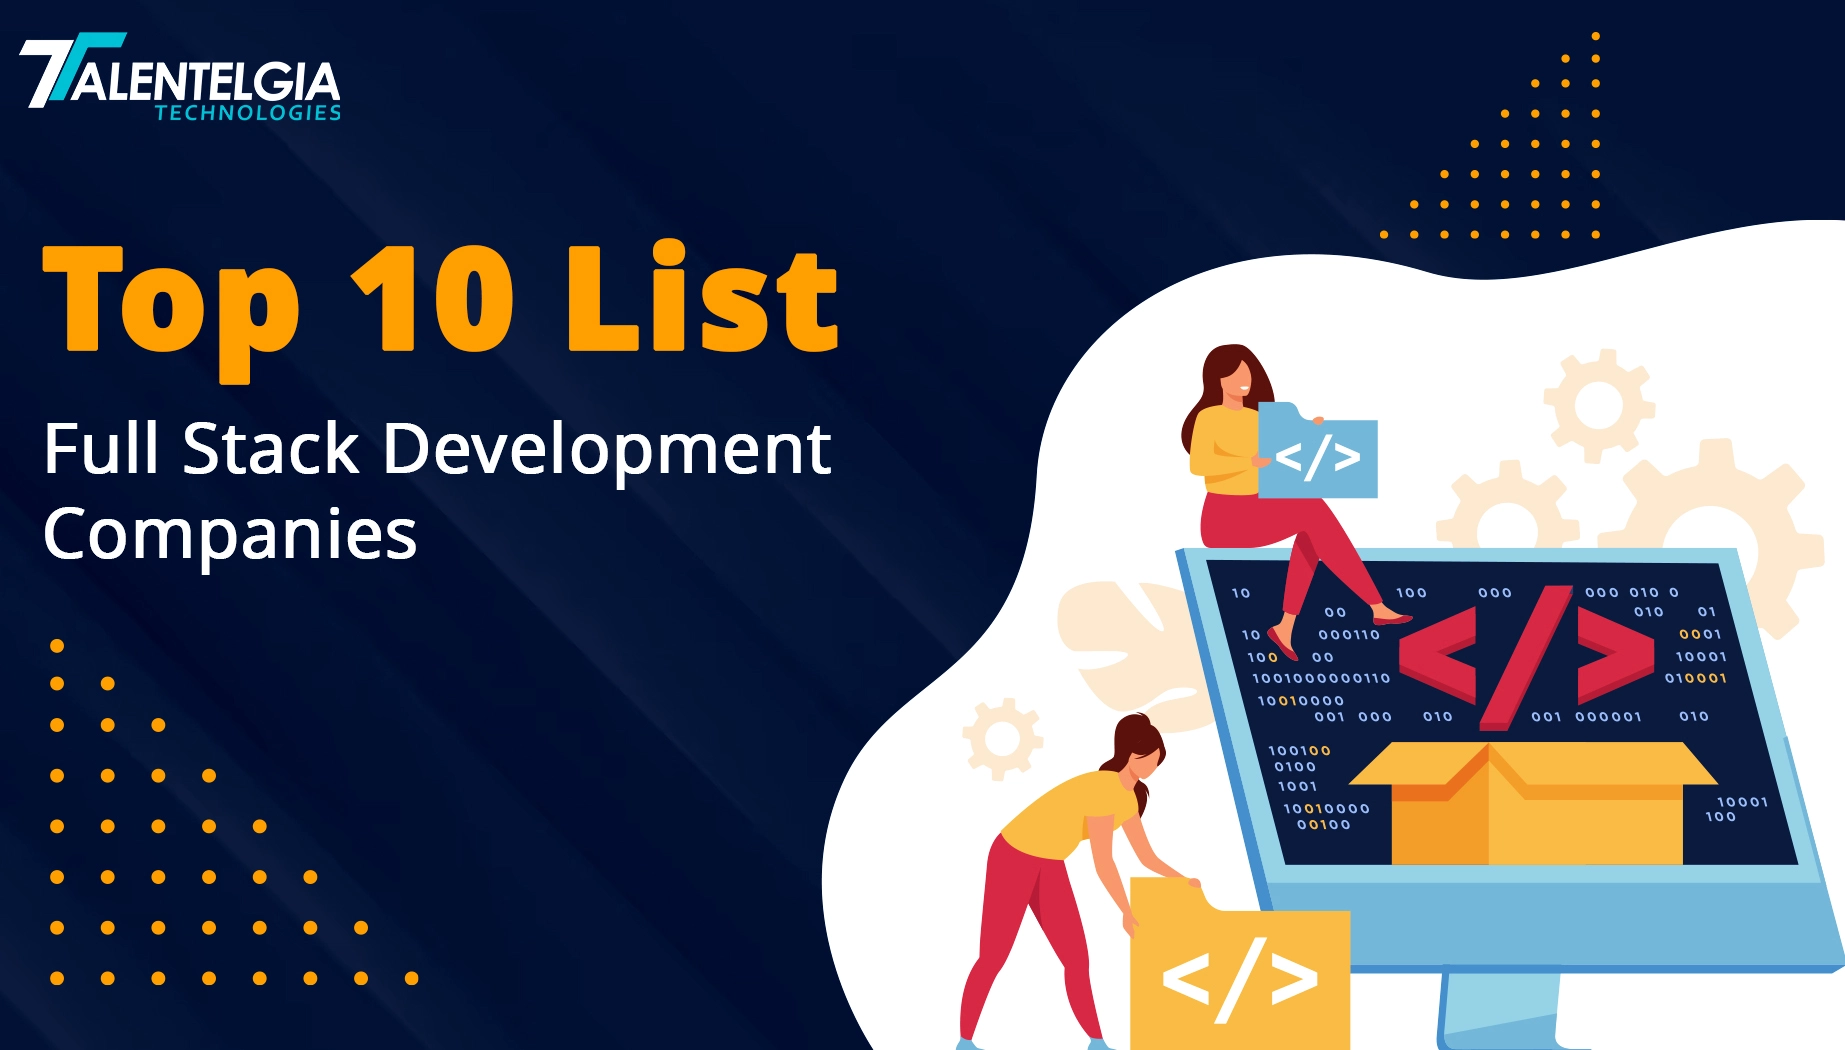 Full Stack Development Companies - Top 10 List